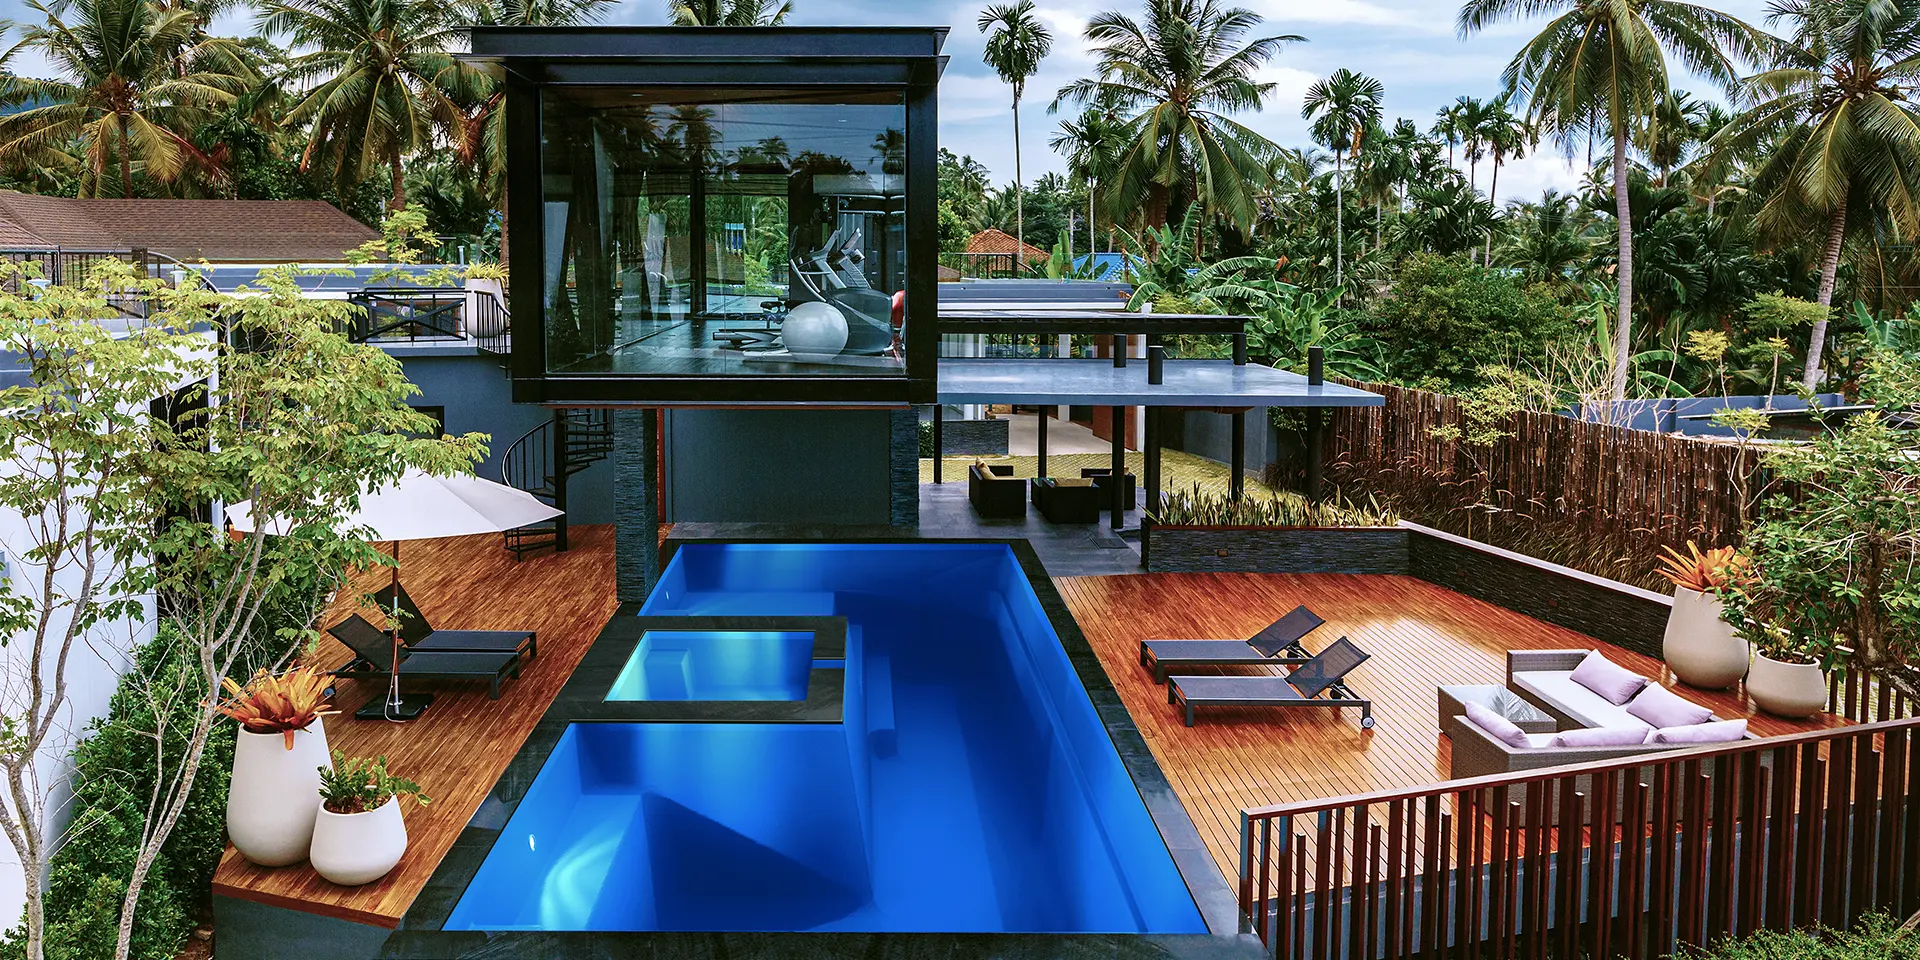 The Muse Inground swimming pool design by Nexus Pools Australia